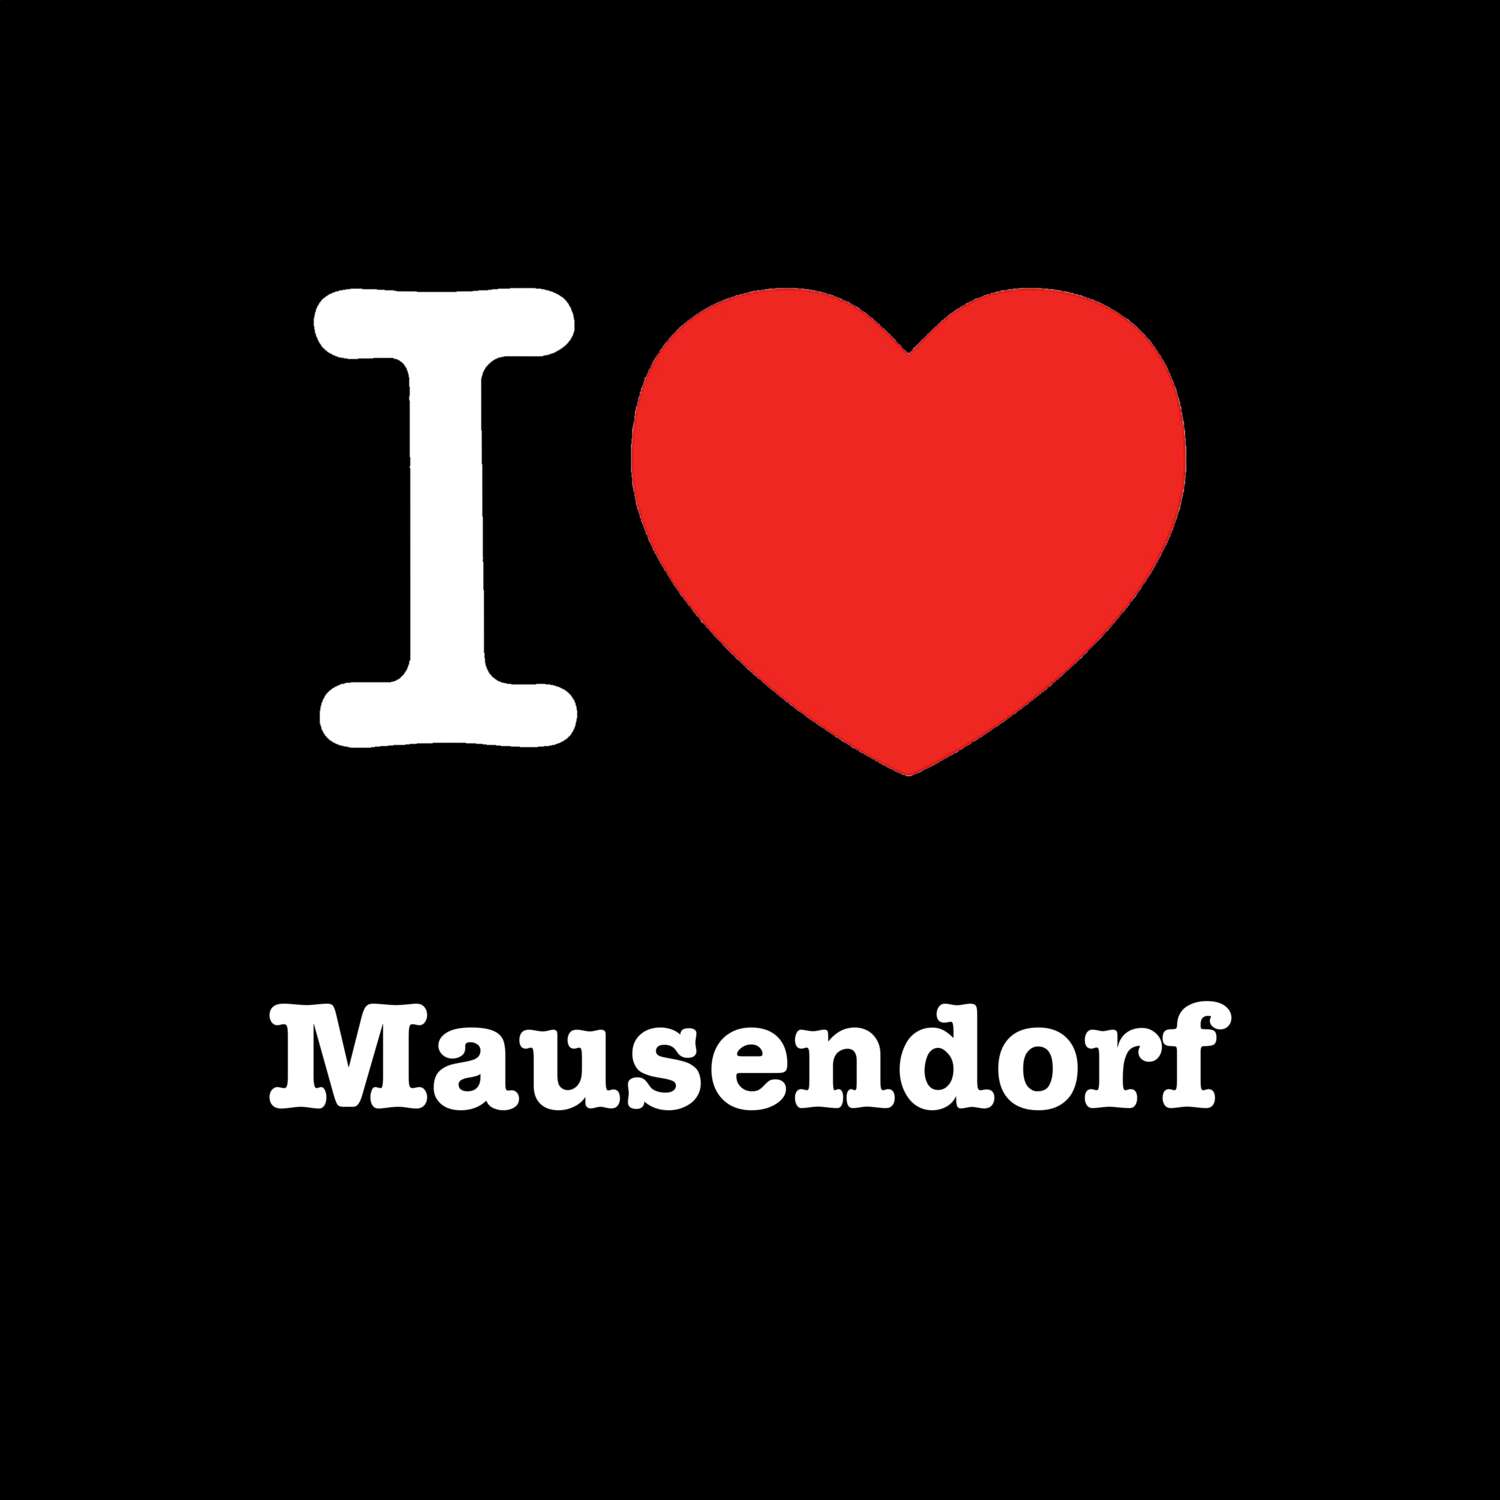 Mausendorf T-Shirt »I love«